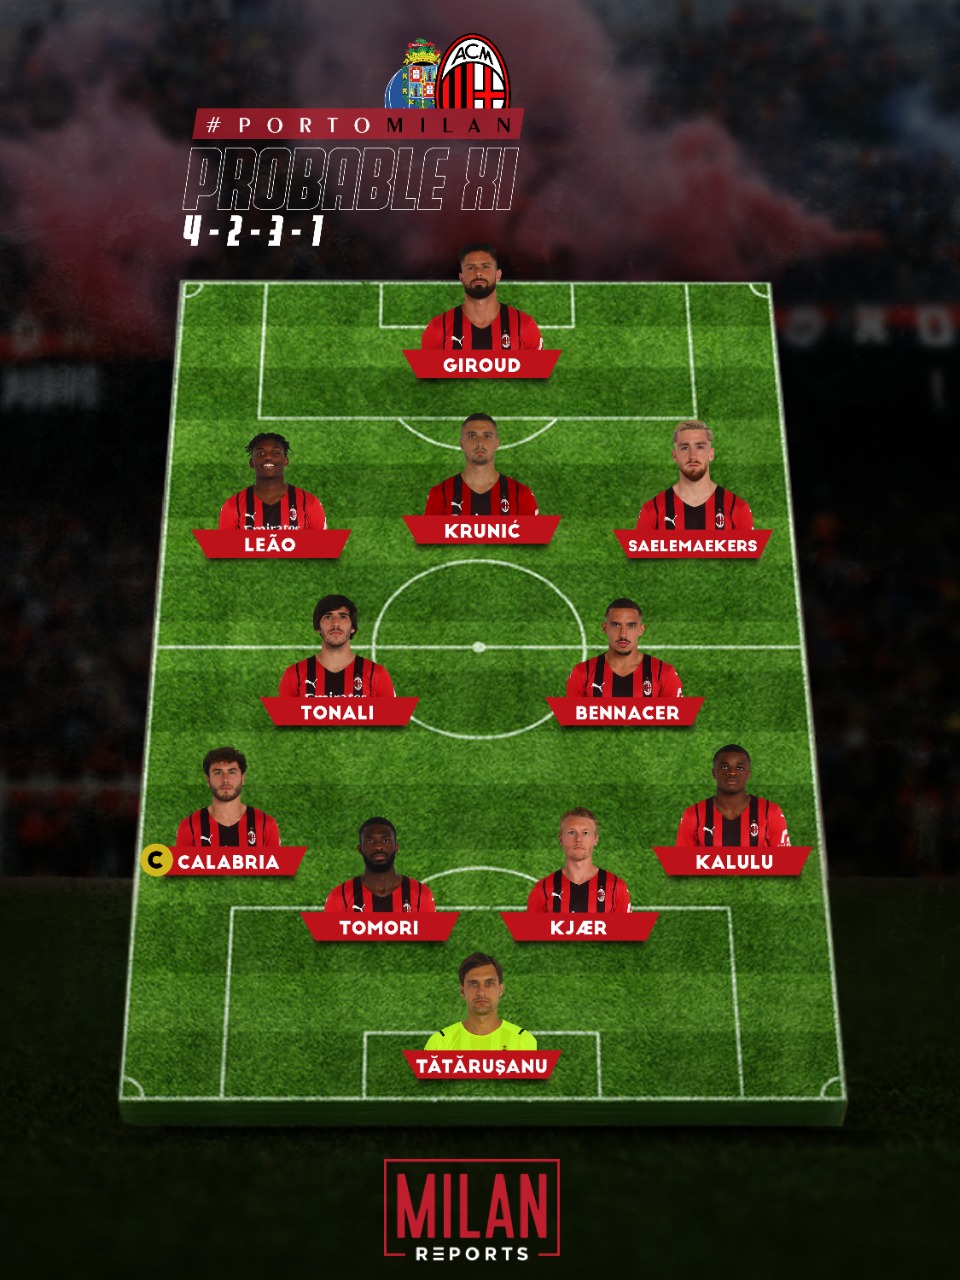 Probable lineup for AC Milan vs Porto (MilanReports.com)